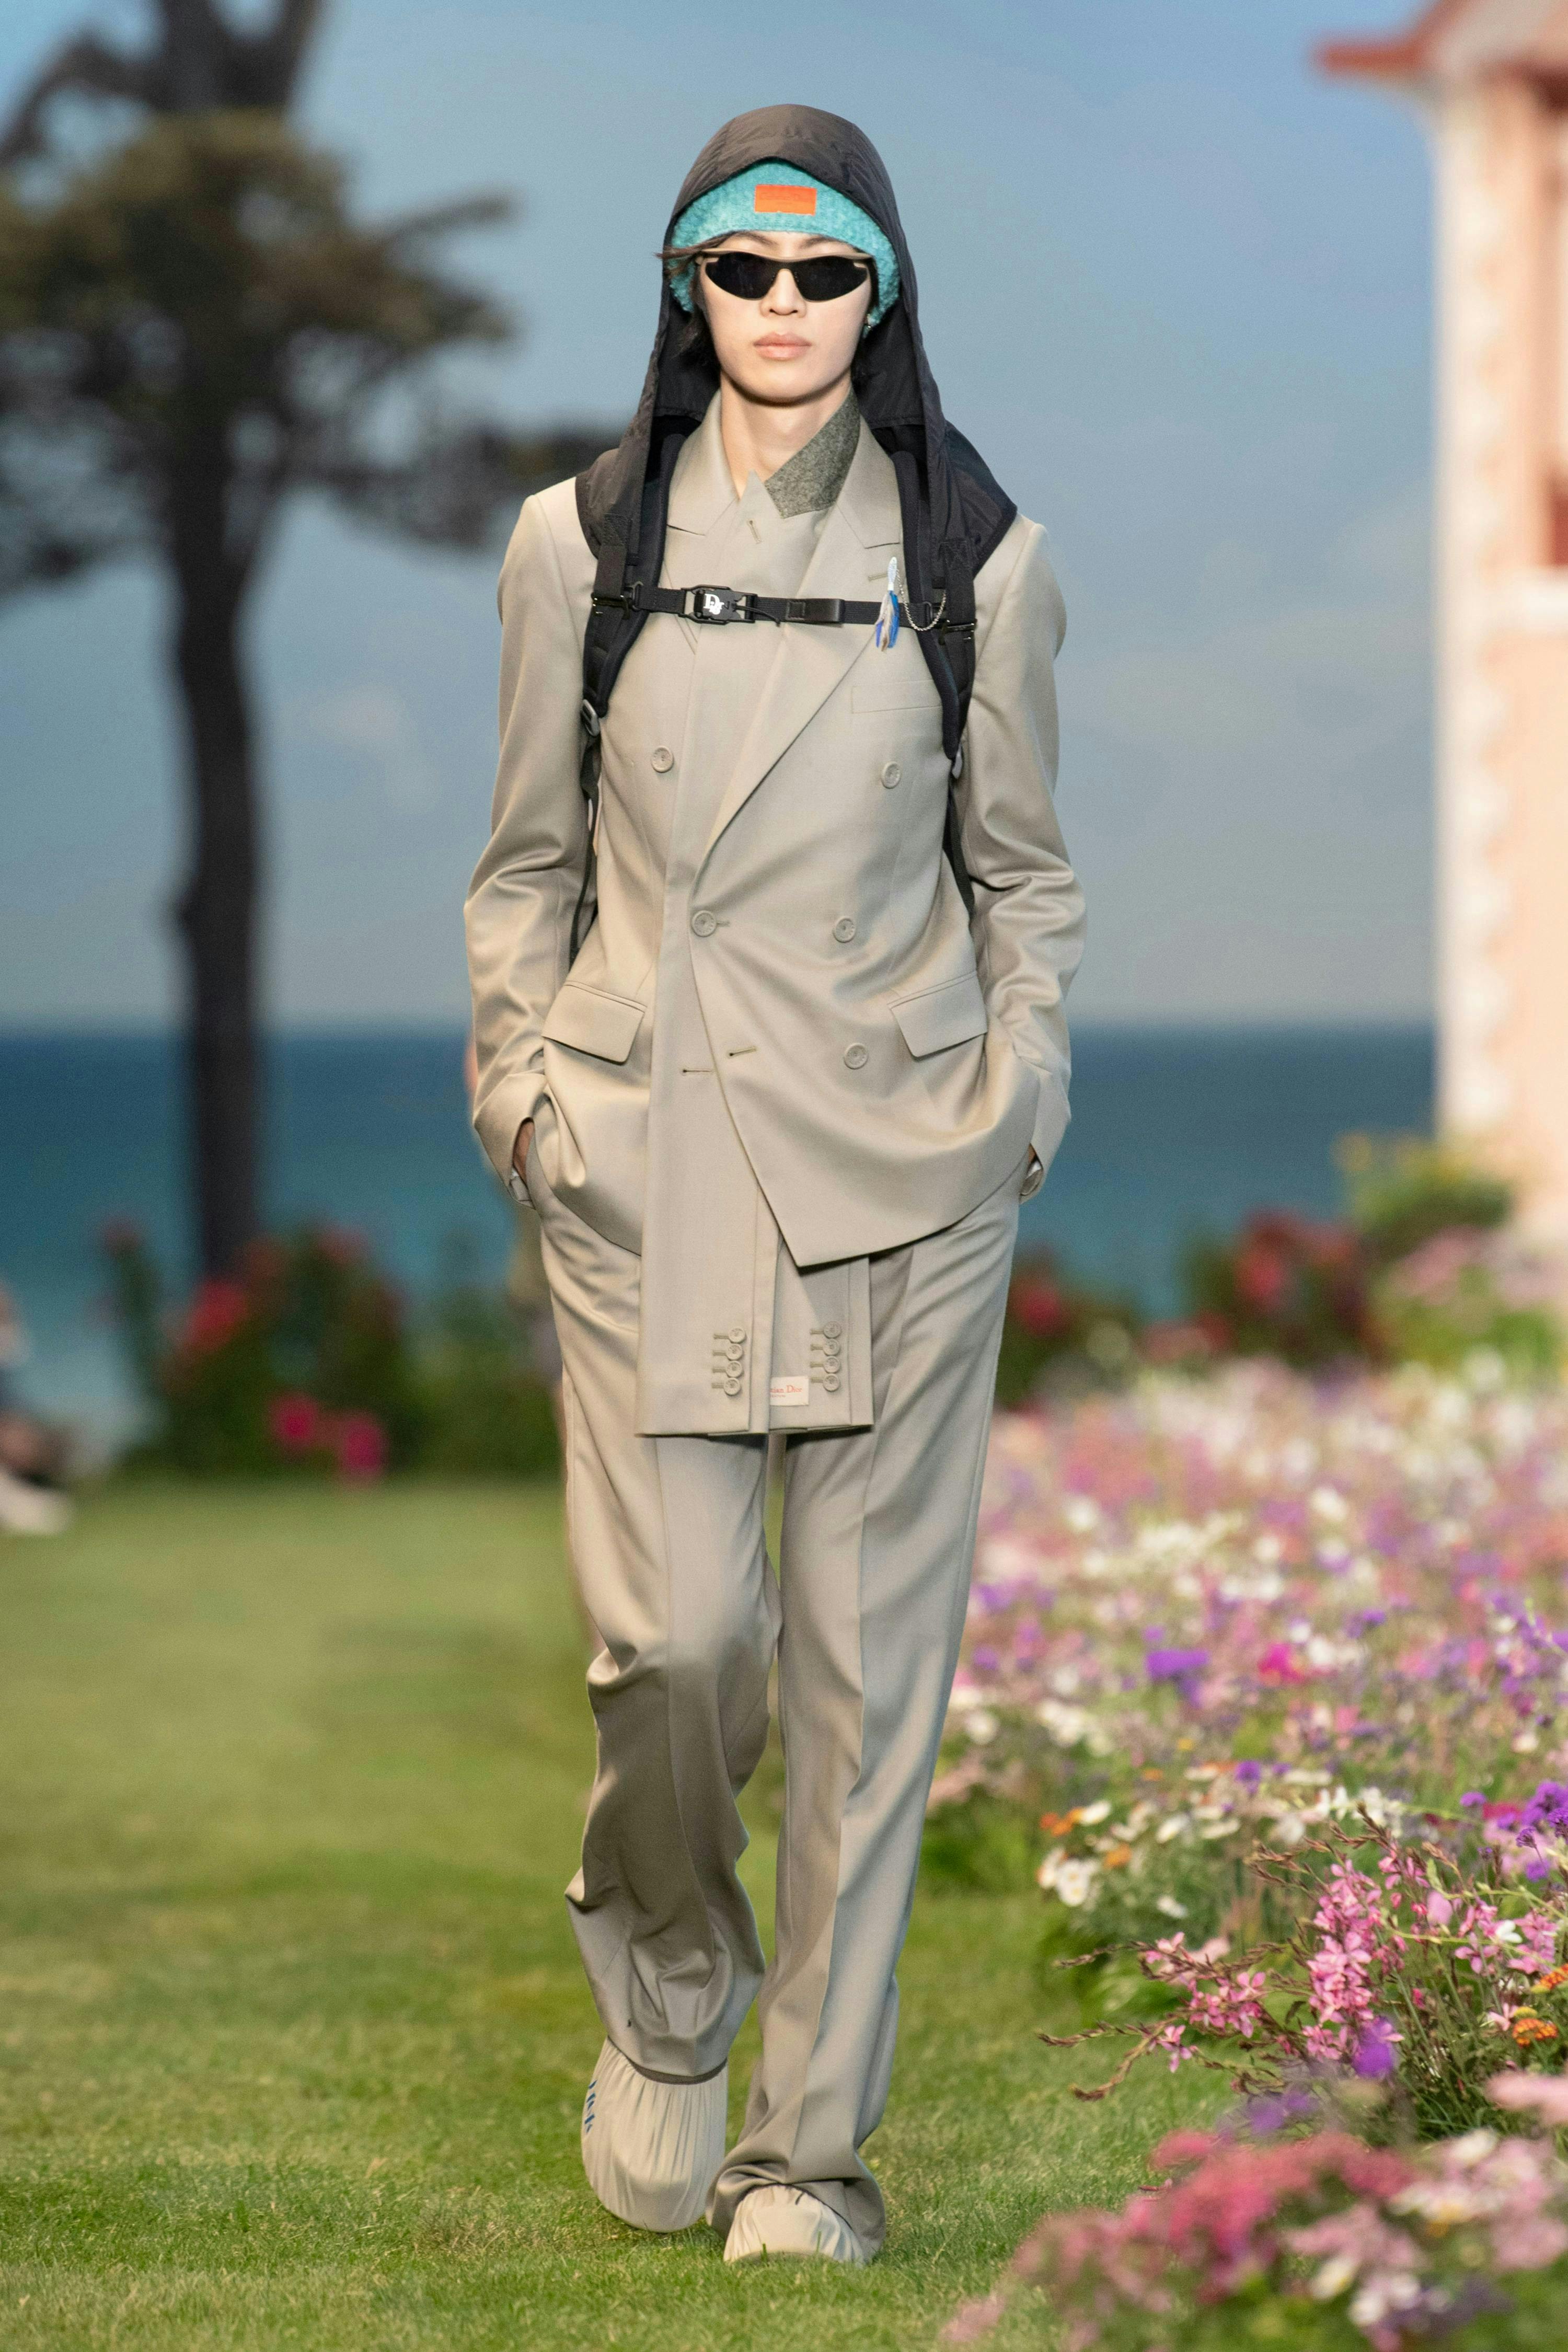 clothing apparel coat overcoat sunglasses accessories person suit grass plant